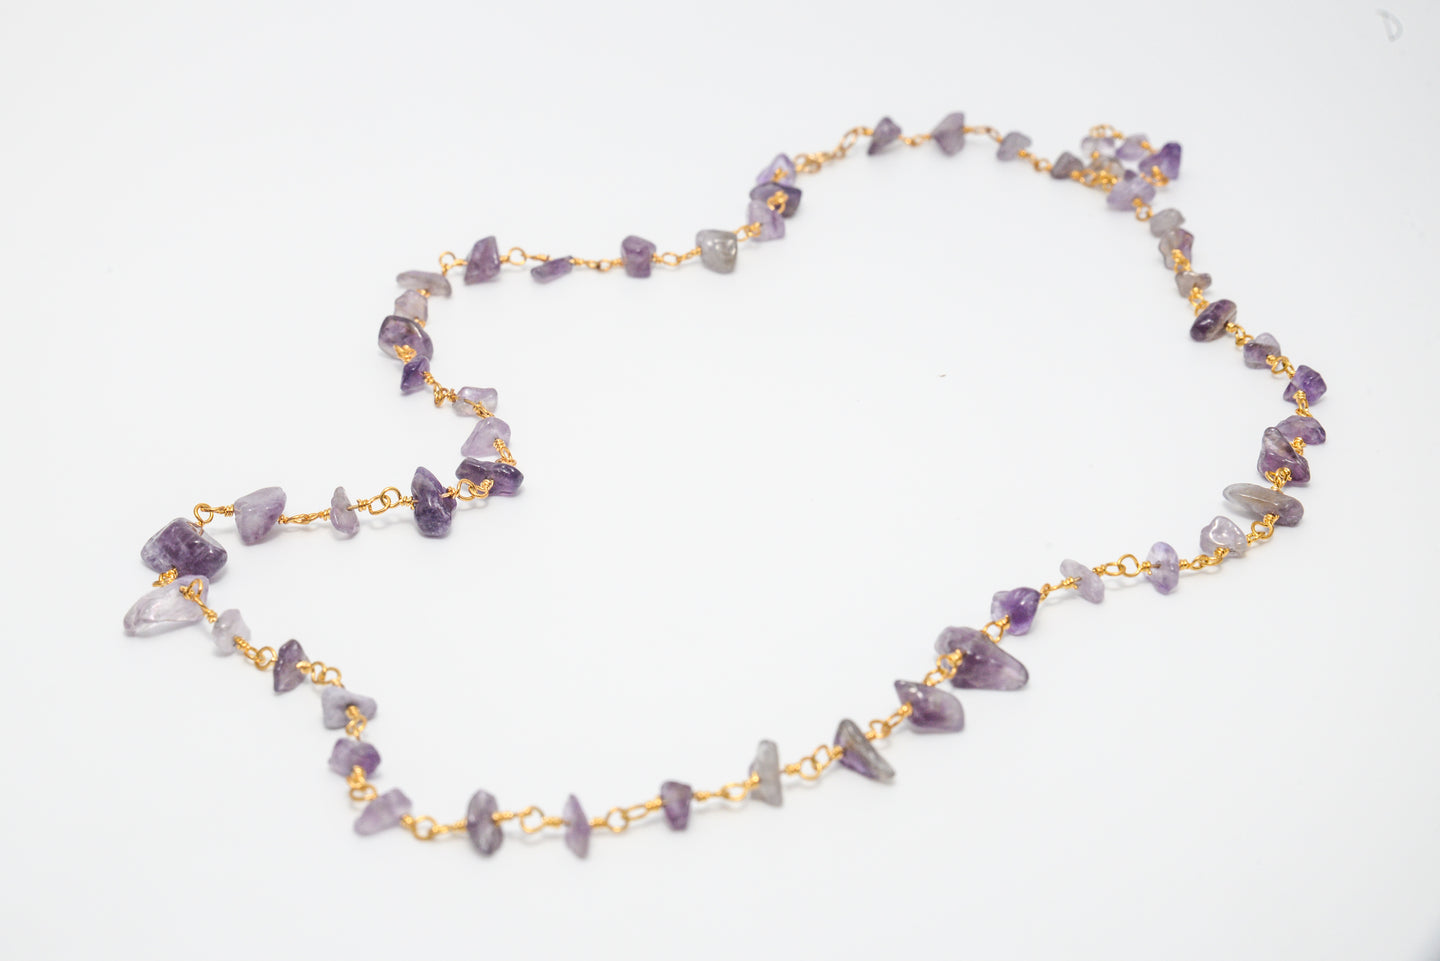 Iregular Shaped Amethyst Necklace - U Are Unique Jewellery